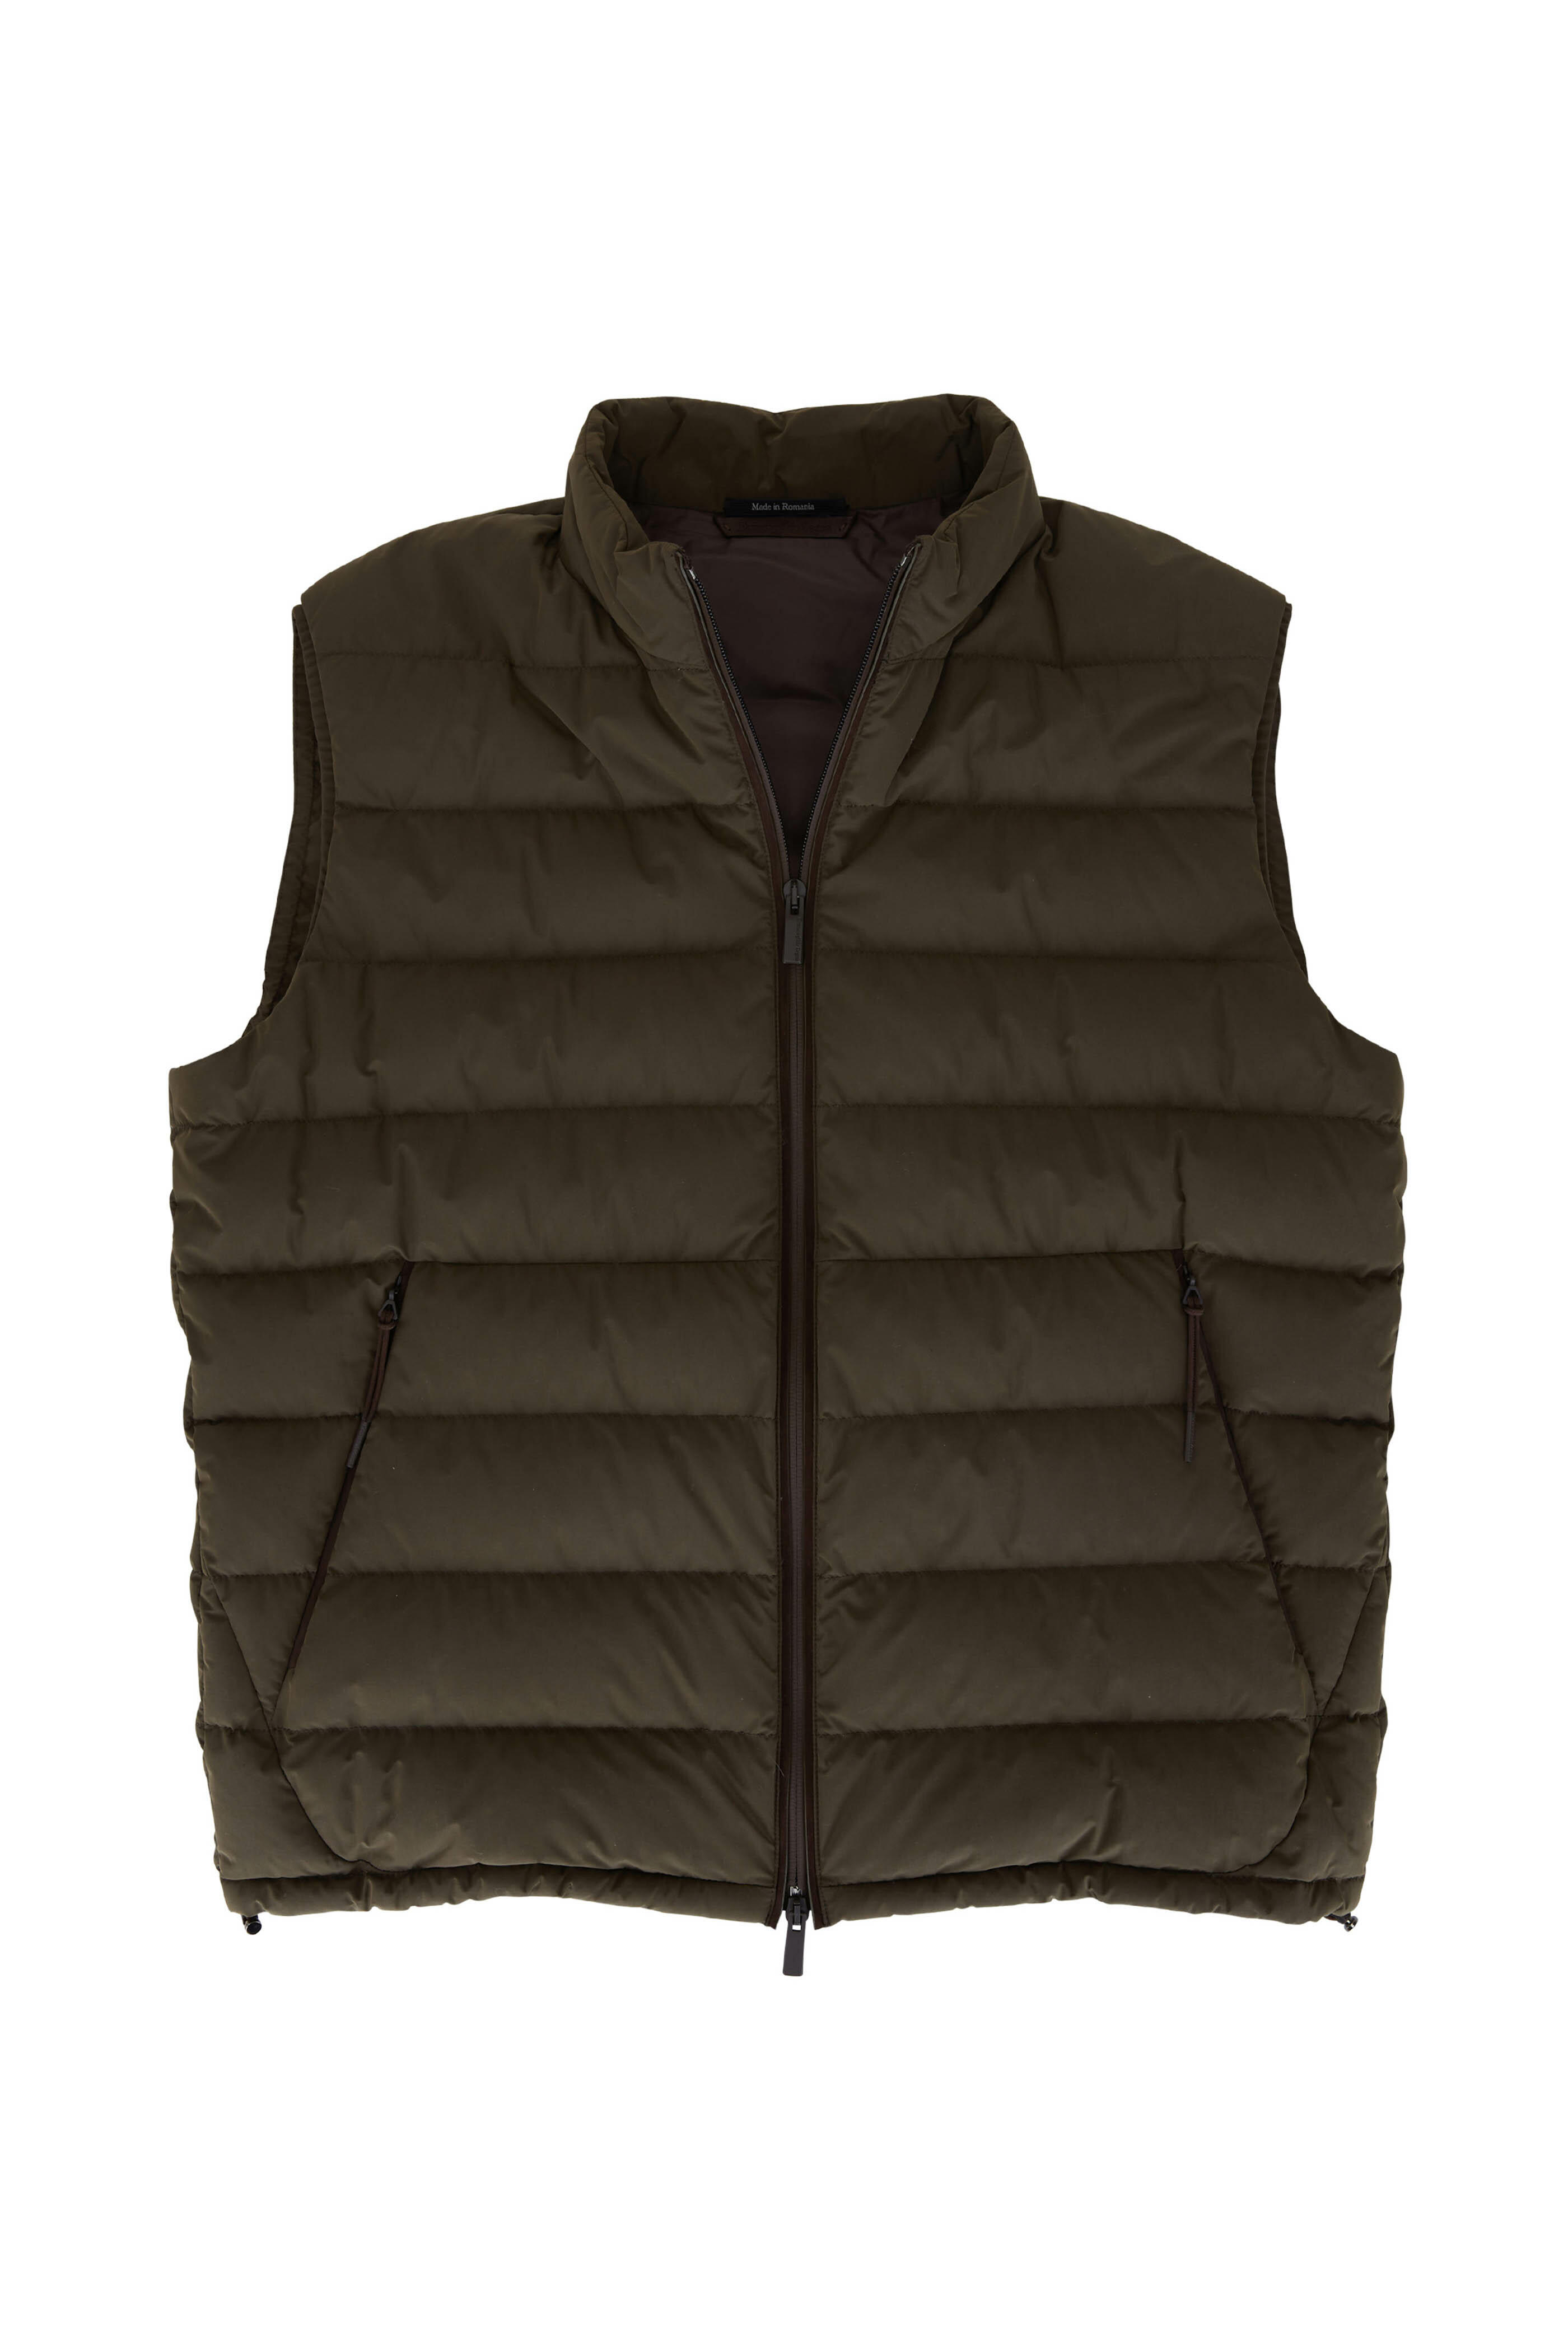 Zegna - Stratos Olive Green Puffer Vest | Mitchell Stores